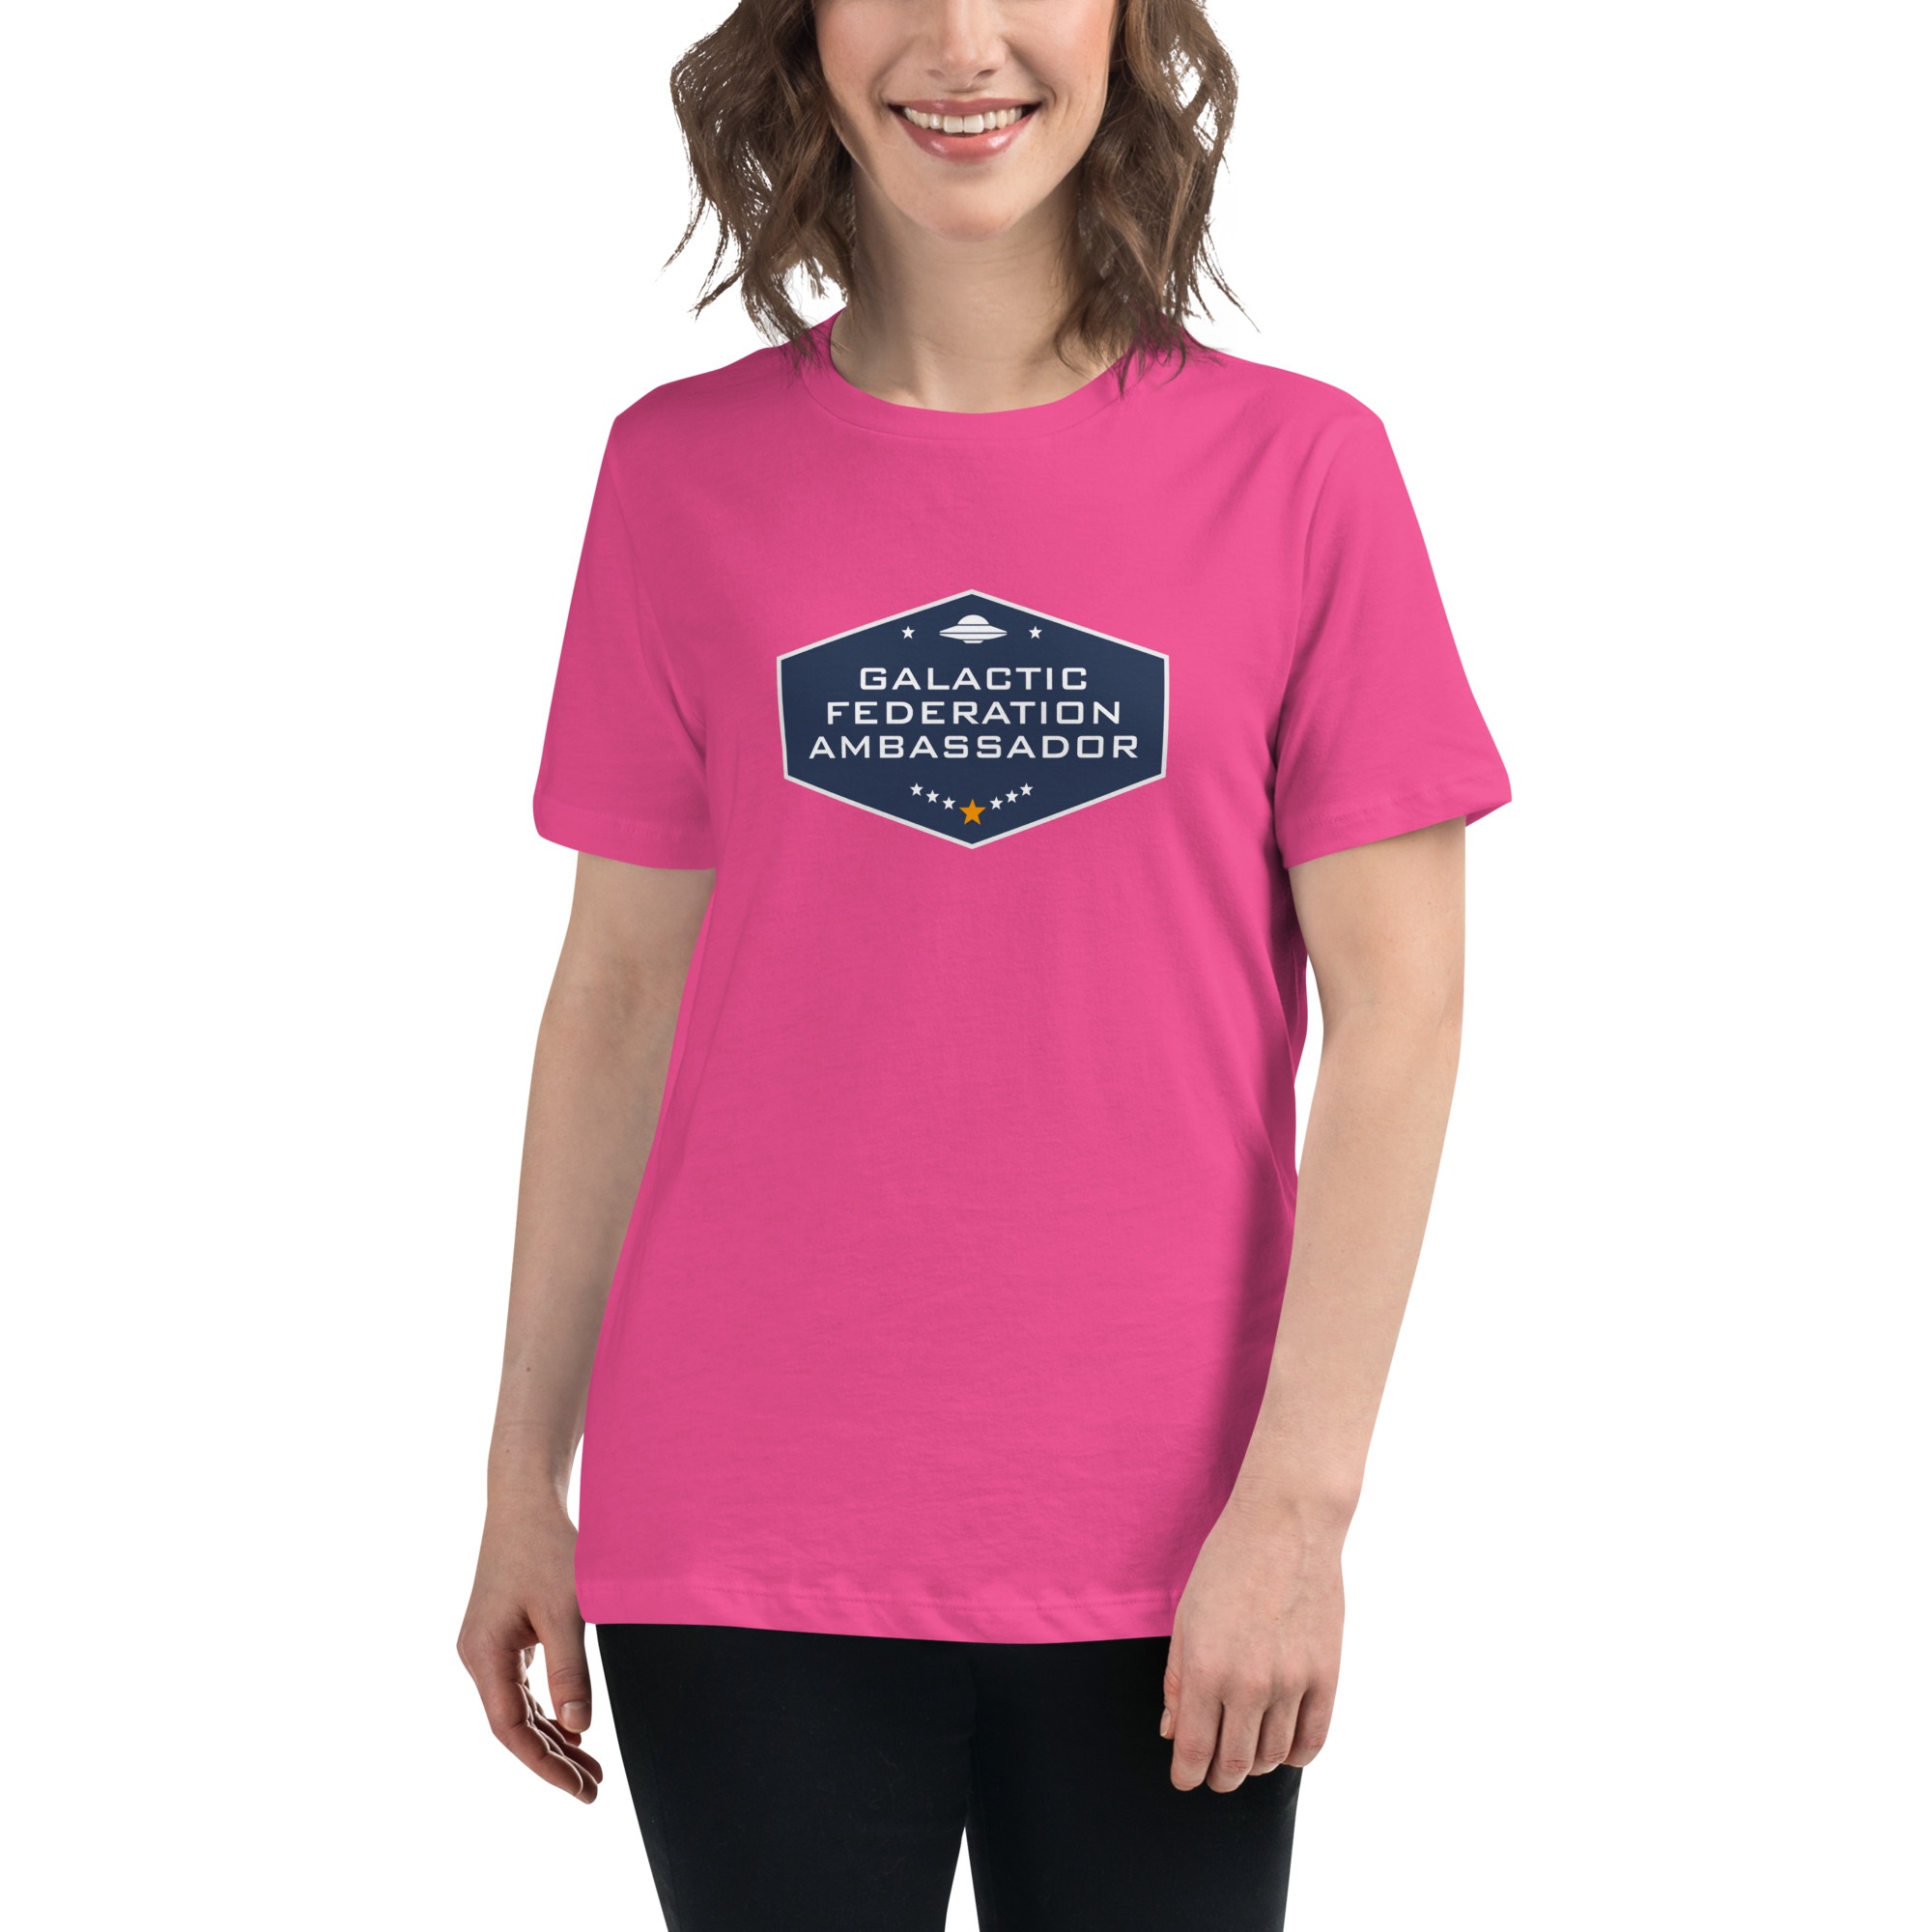 Galactic Federation Ambassador Women's T shirt Berry